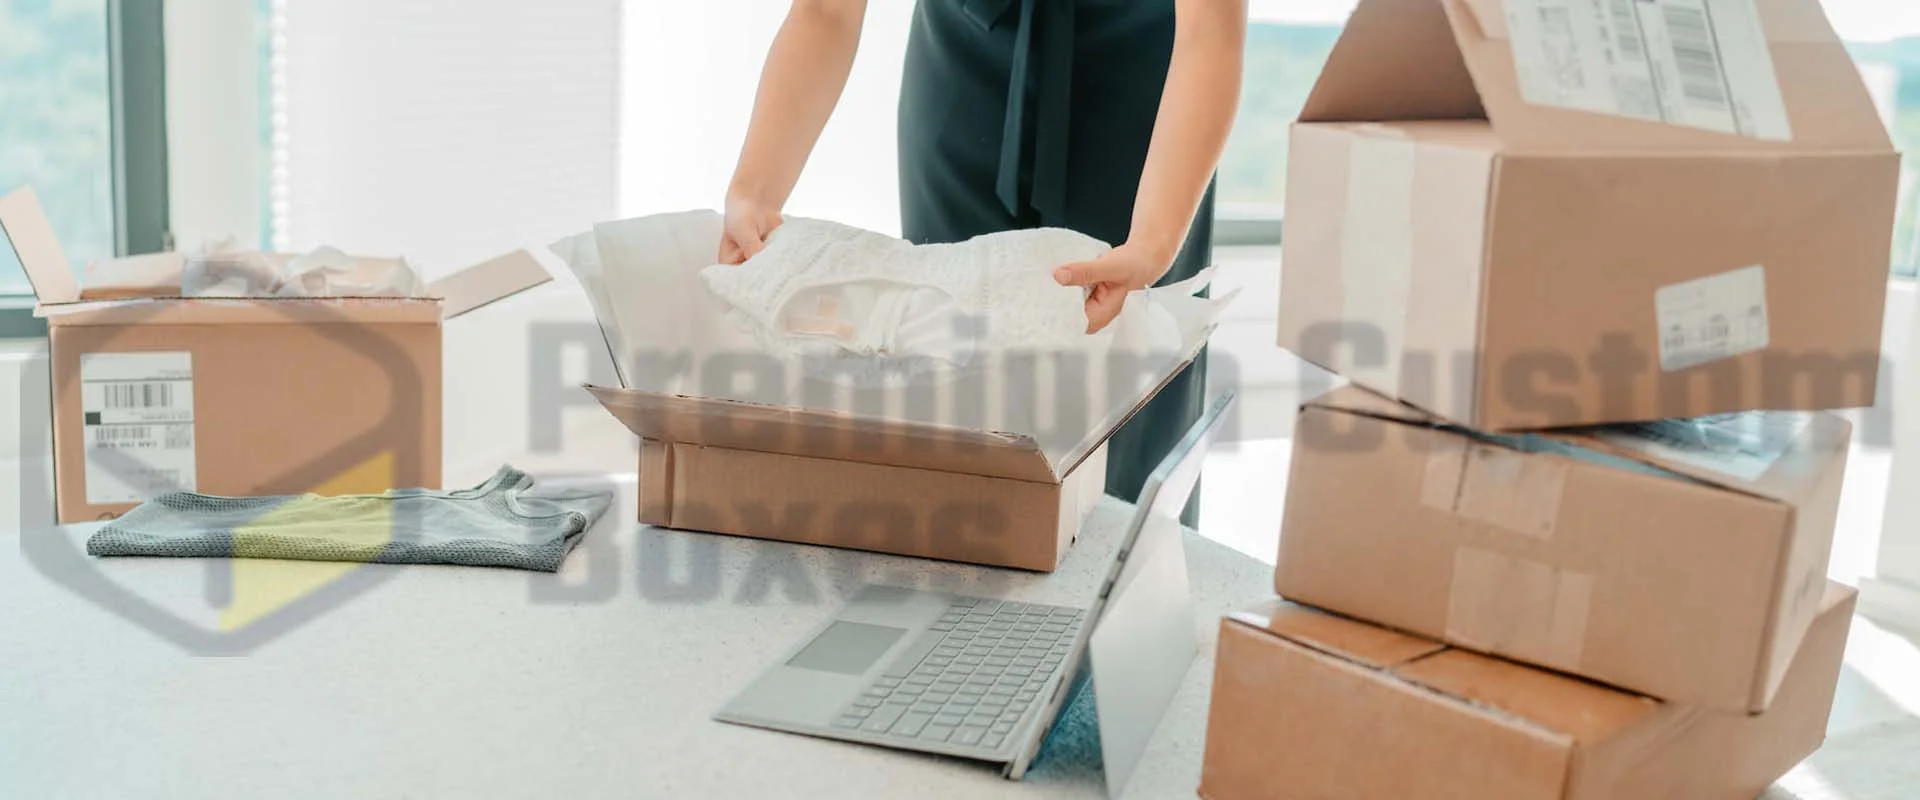 e-commerce shipping boxes